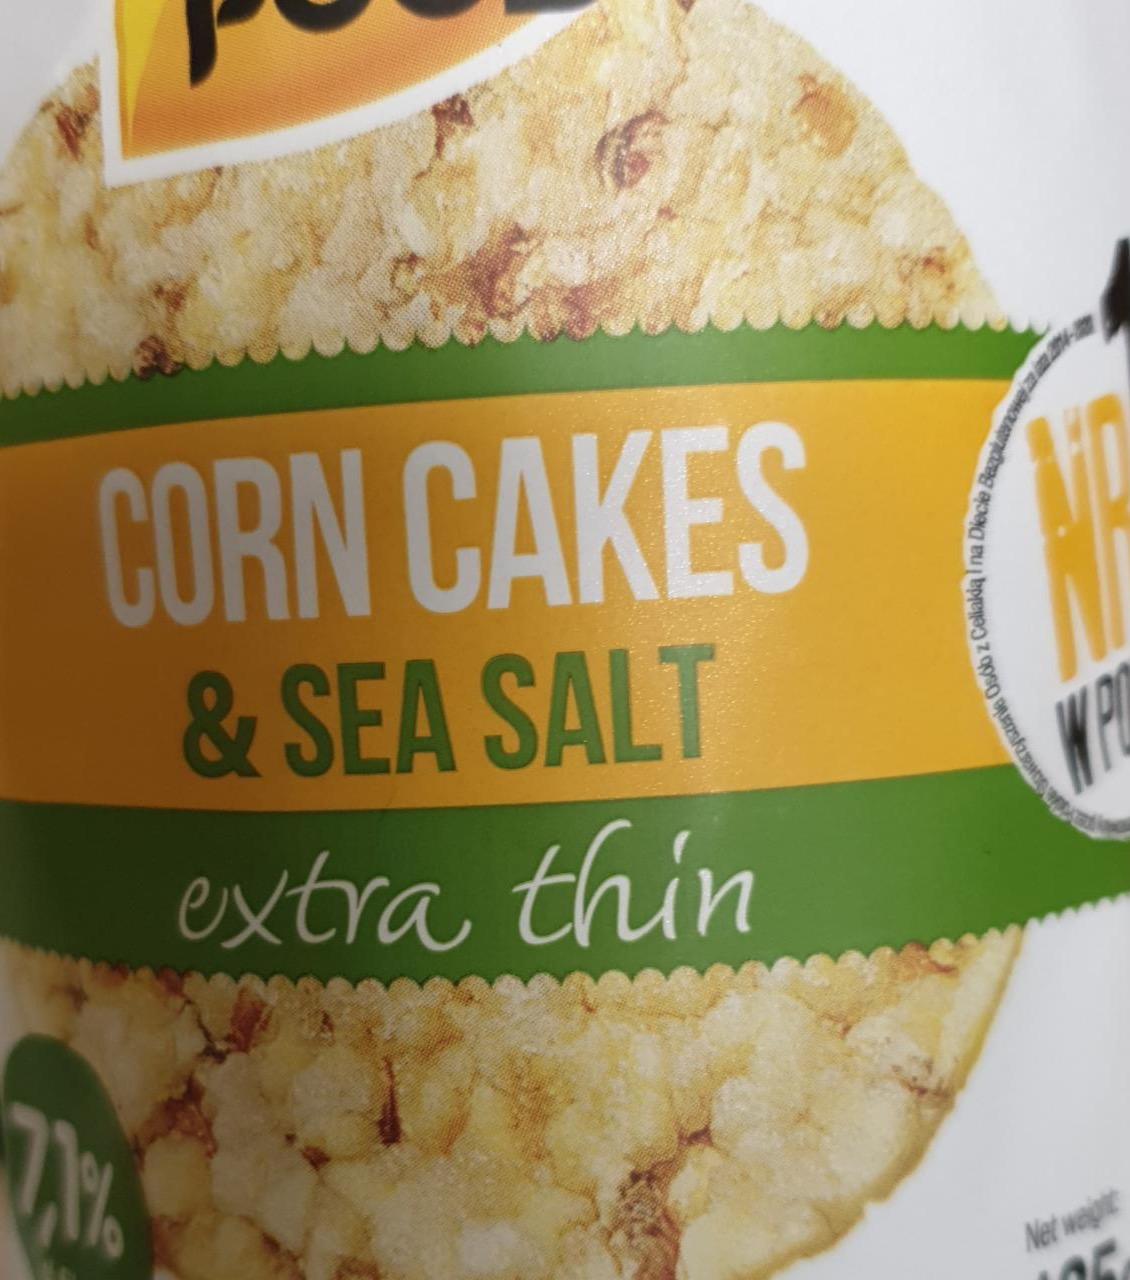 Zdjęcia - Corn cakes & sea salt extra thin Good food